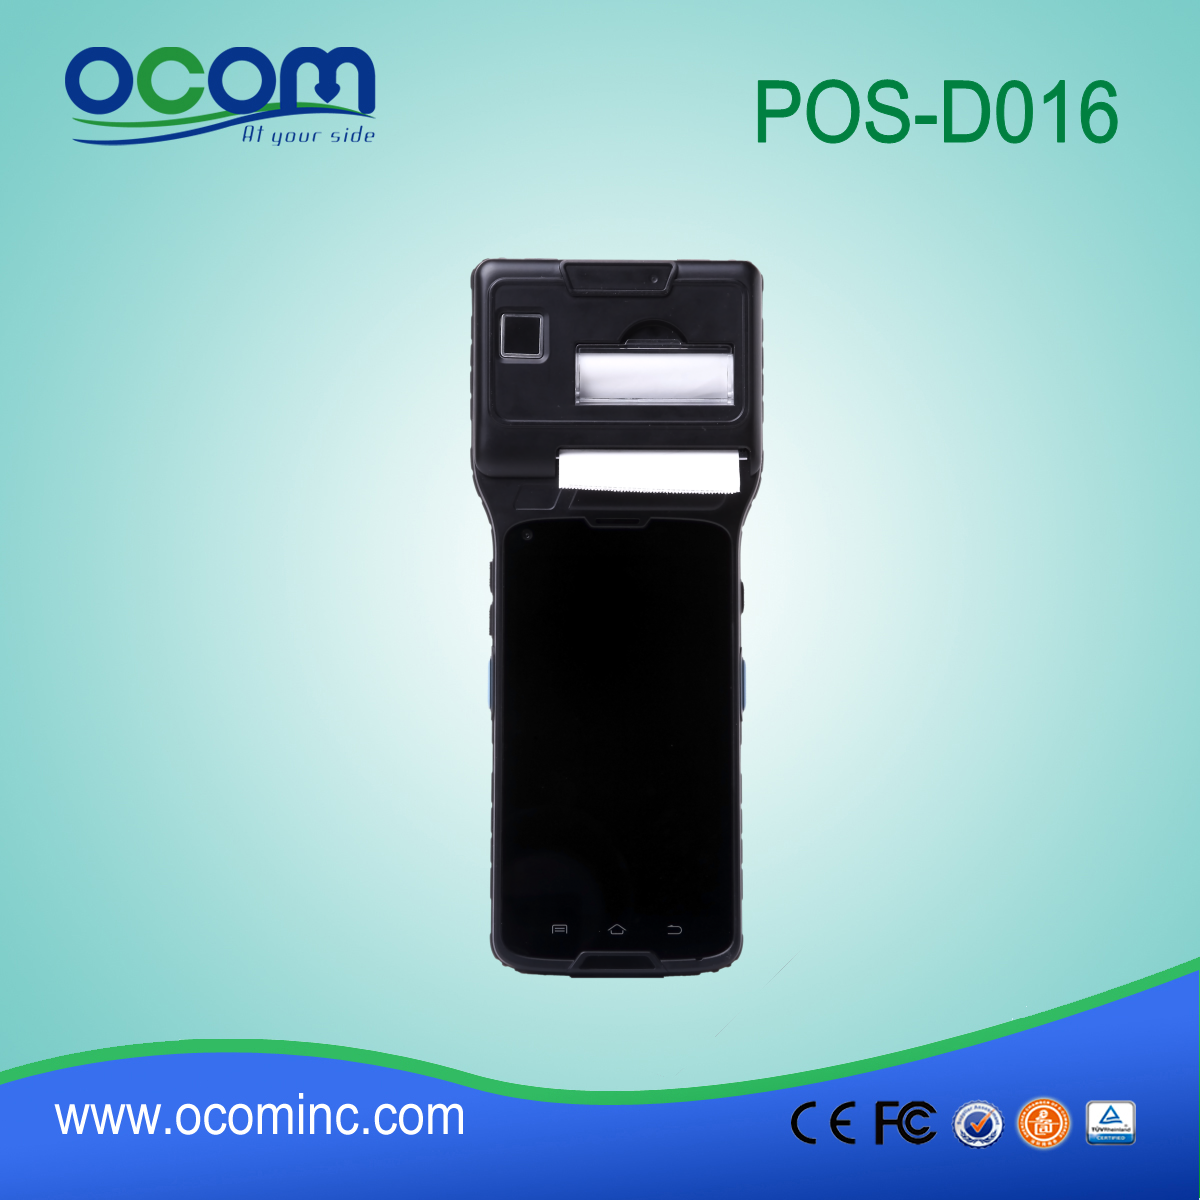 5 '' Touch Screen Pos Terminal met 3G (WCDMA) + WIFI + BT + GPS + camera + thermische printer + NFC (OCBS-D016)